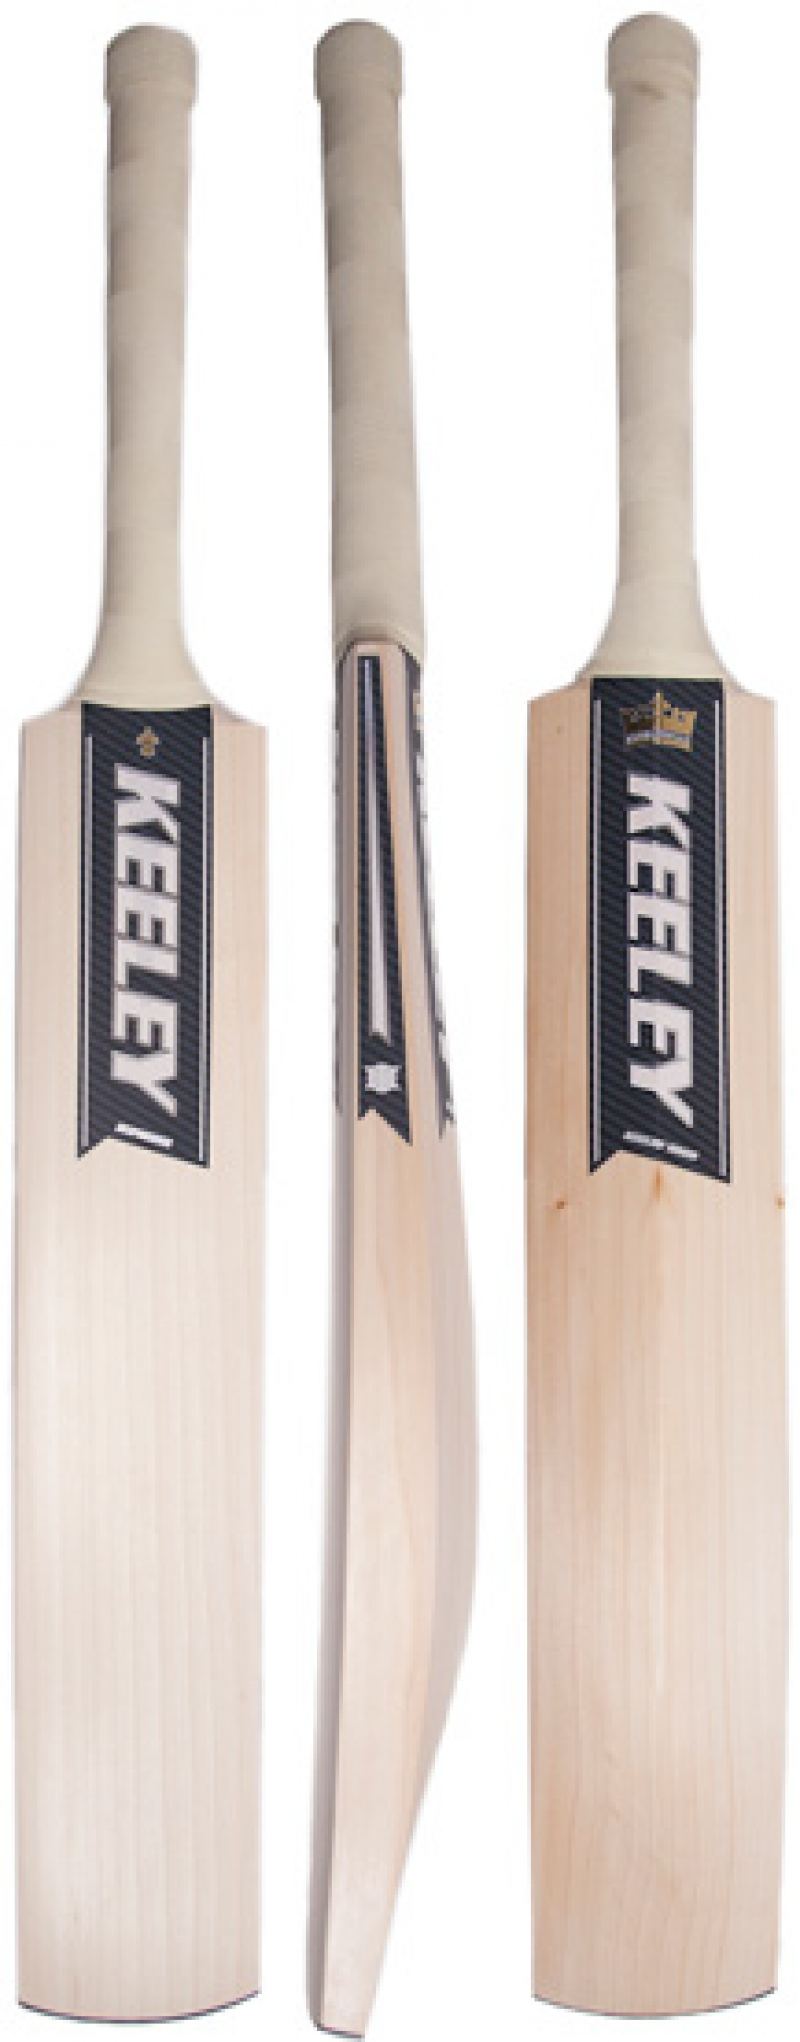 Keeley Superior Premium Cricket Bat